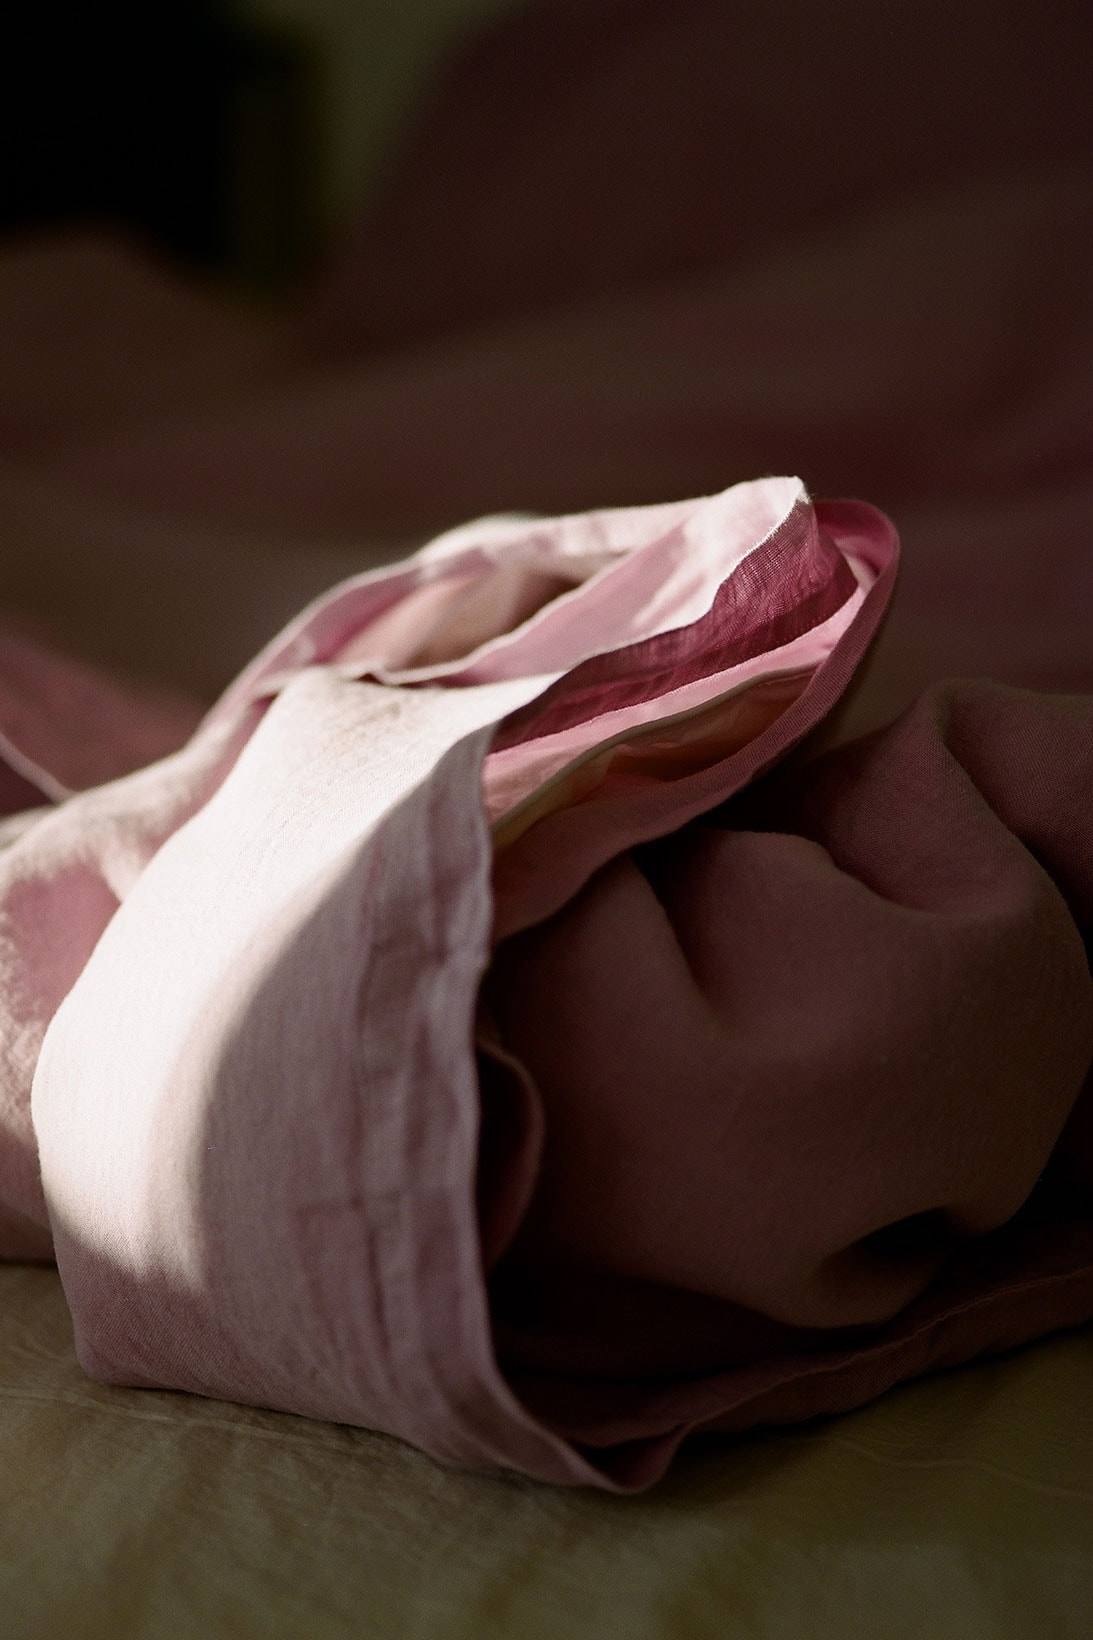 tekla summer linen bedding collection pink dawn purple light